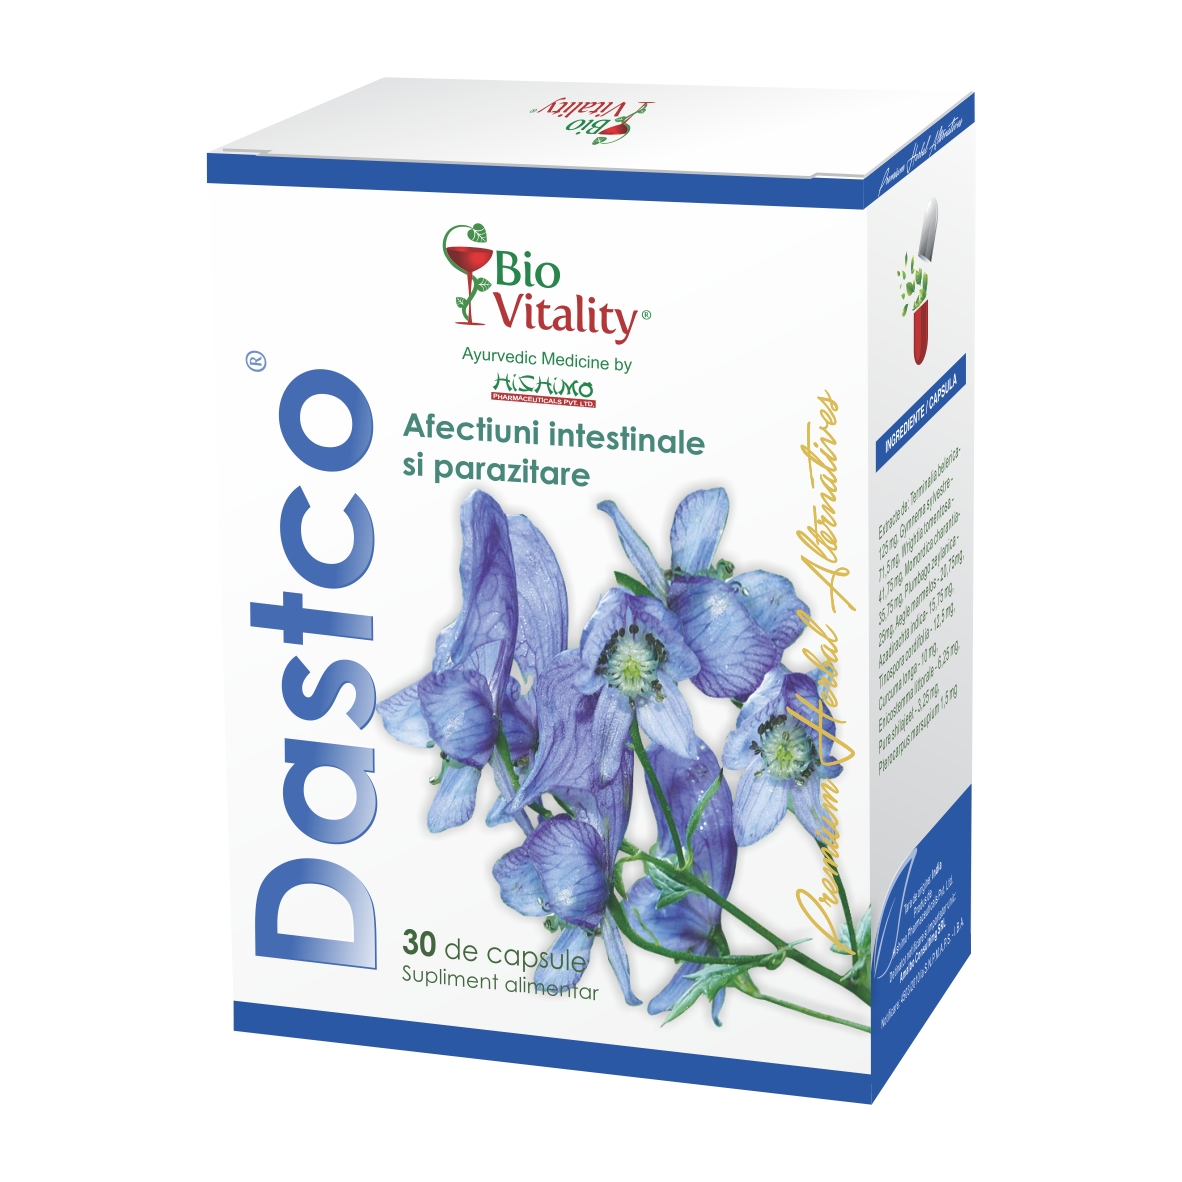 DASTCO 30 CAPSULE Bio Vitality imagine teramed.ro